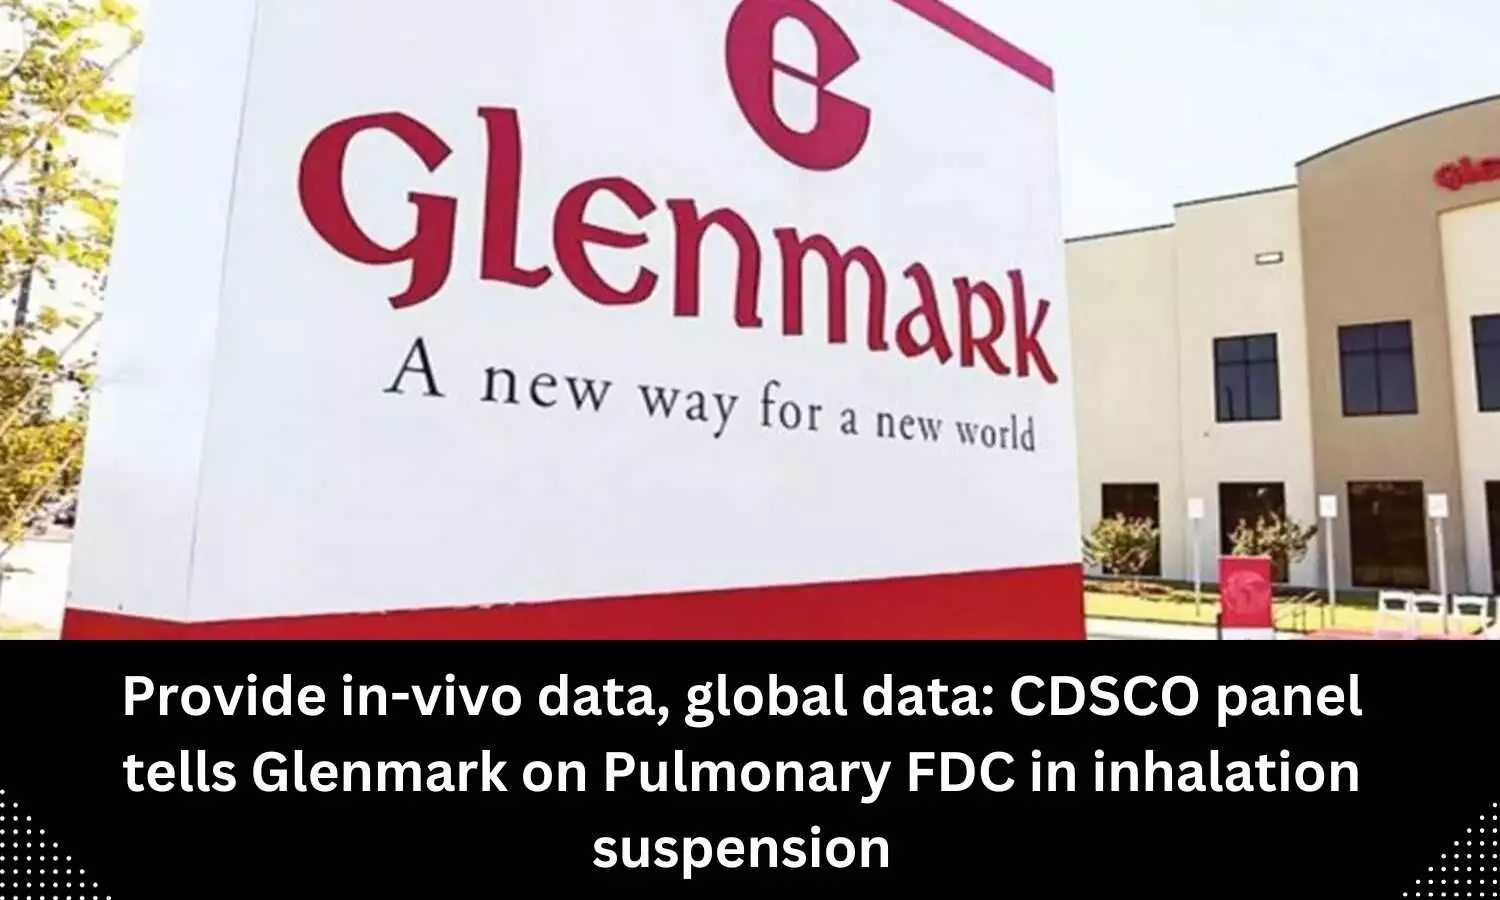 CDSCO panel tells Glenmark to provide in-vivo data, global data concerning Pulmonary FDC in inhalation suspension